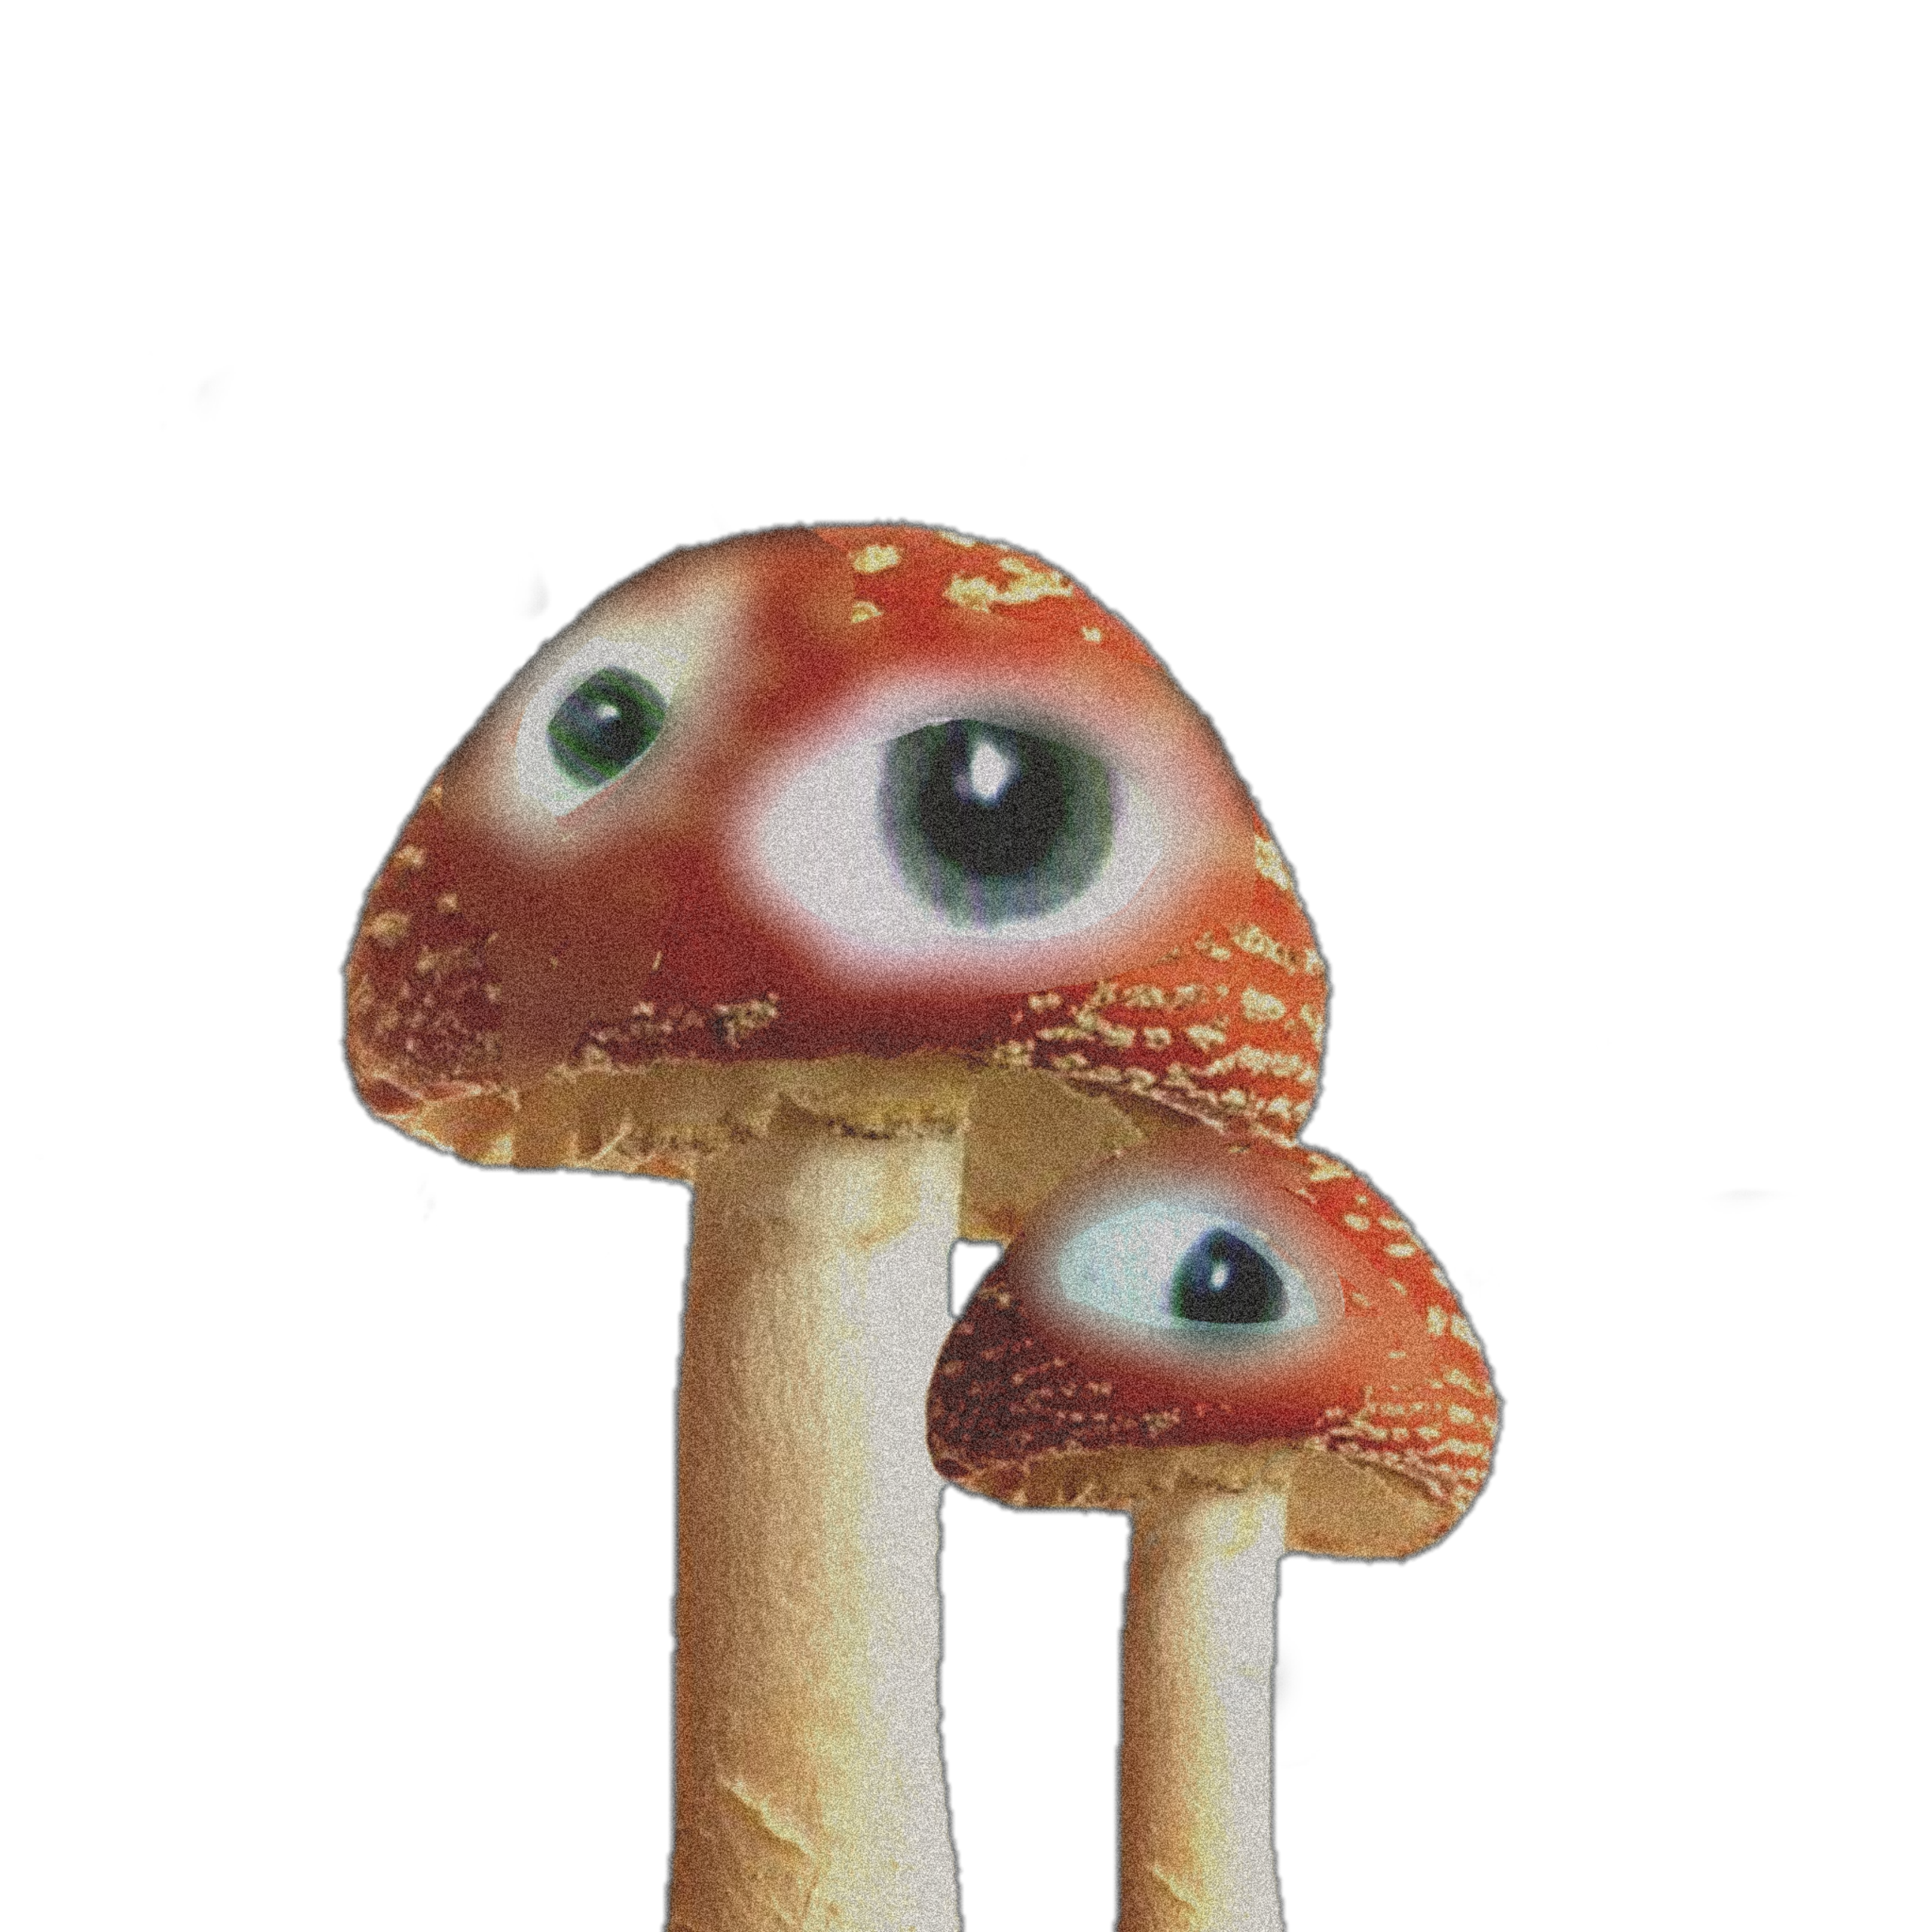 The Most Edited #mushrooms